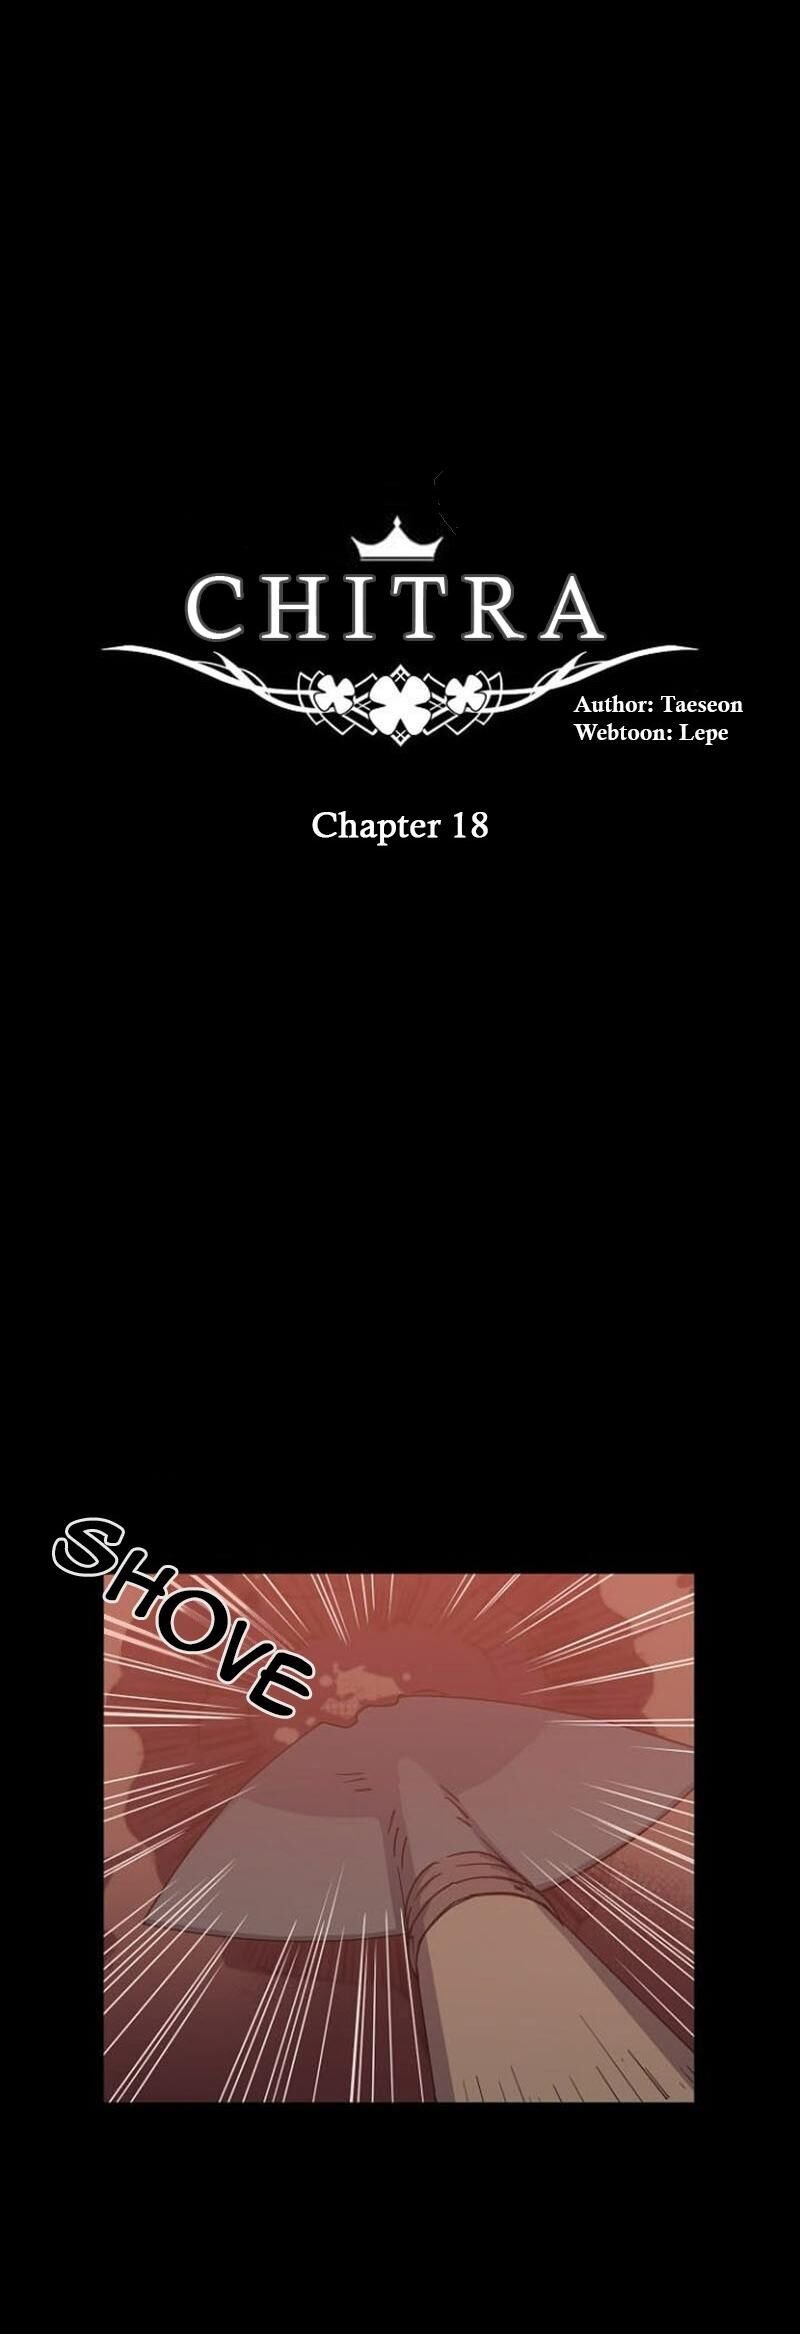 Chitra chapter 18